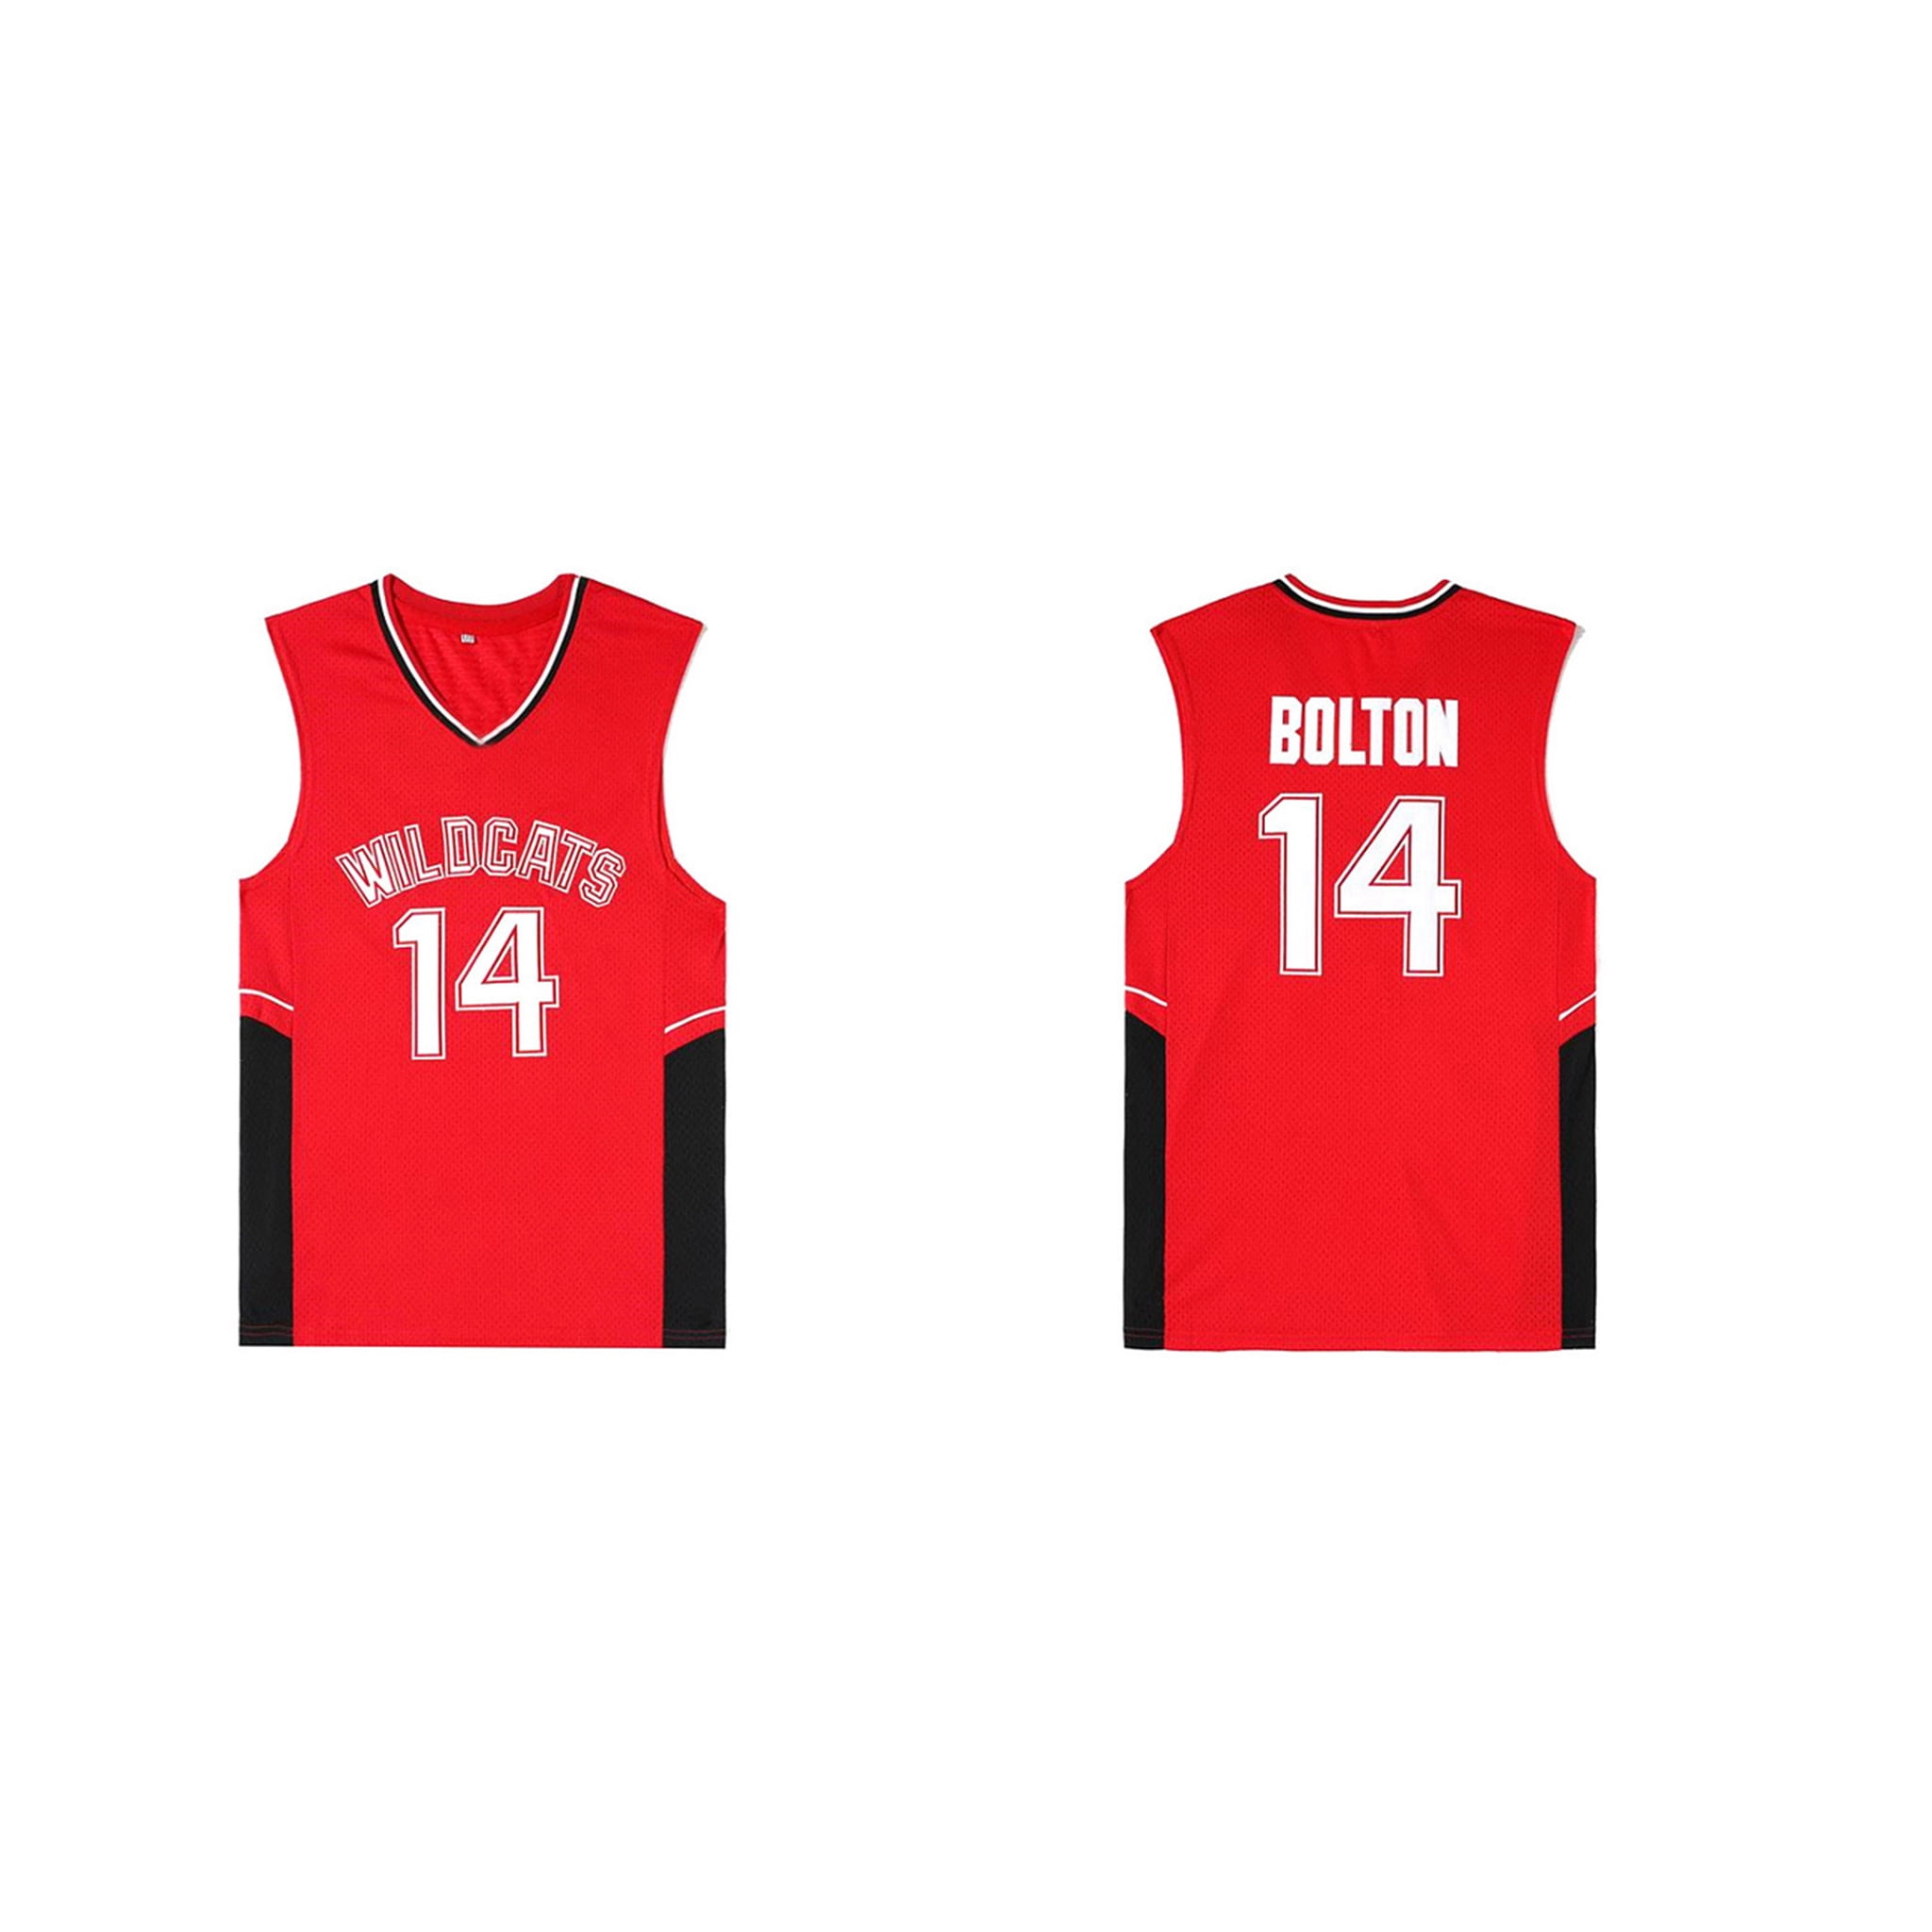 Custom Team Basketball Red Jersey White